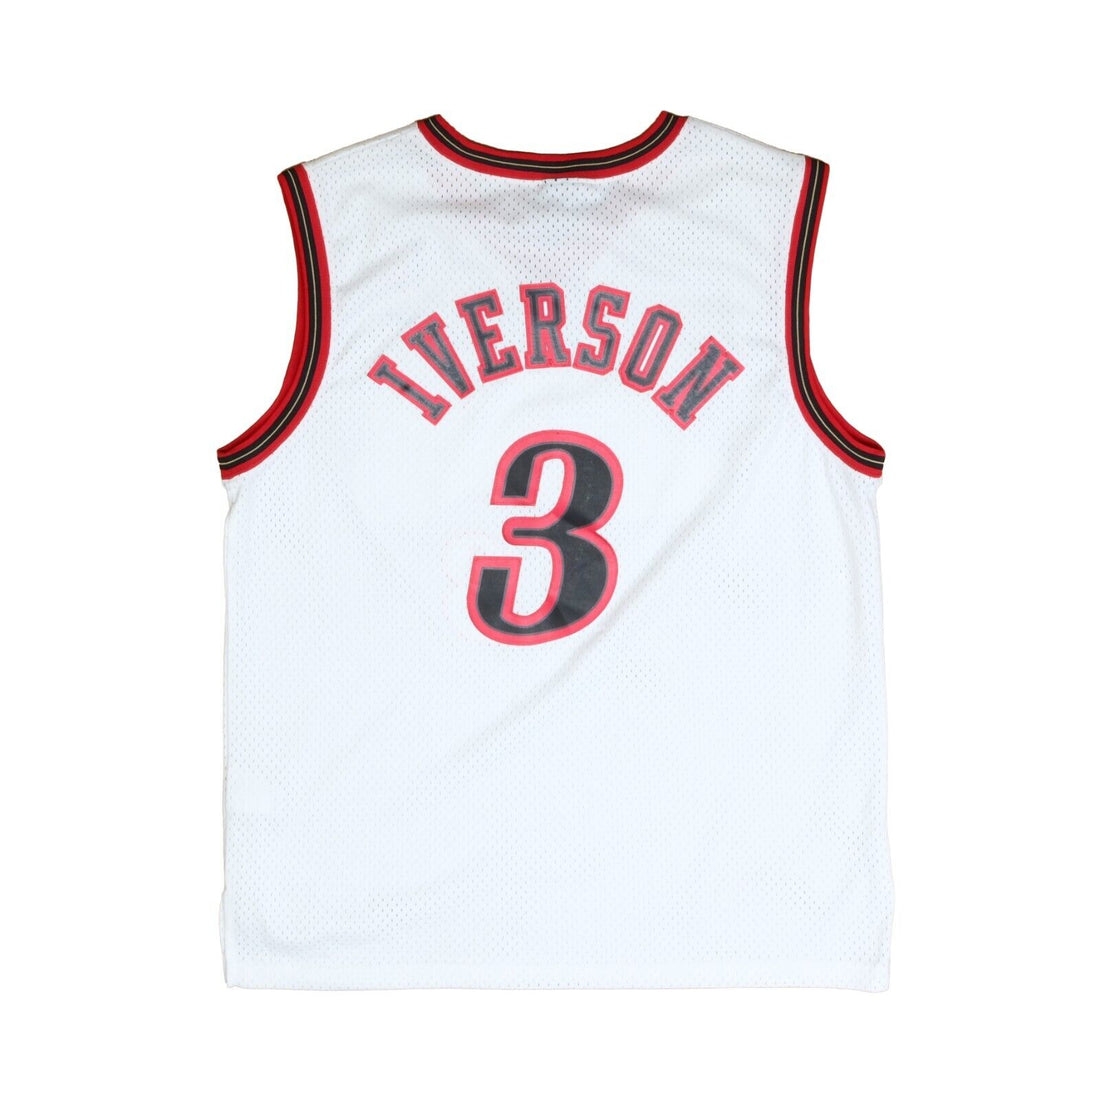 Size 40 US. VTG NBA Champion Jersey Iverson 3 Philadelphia 